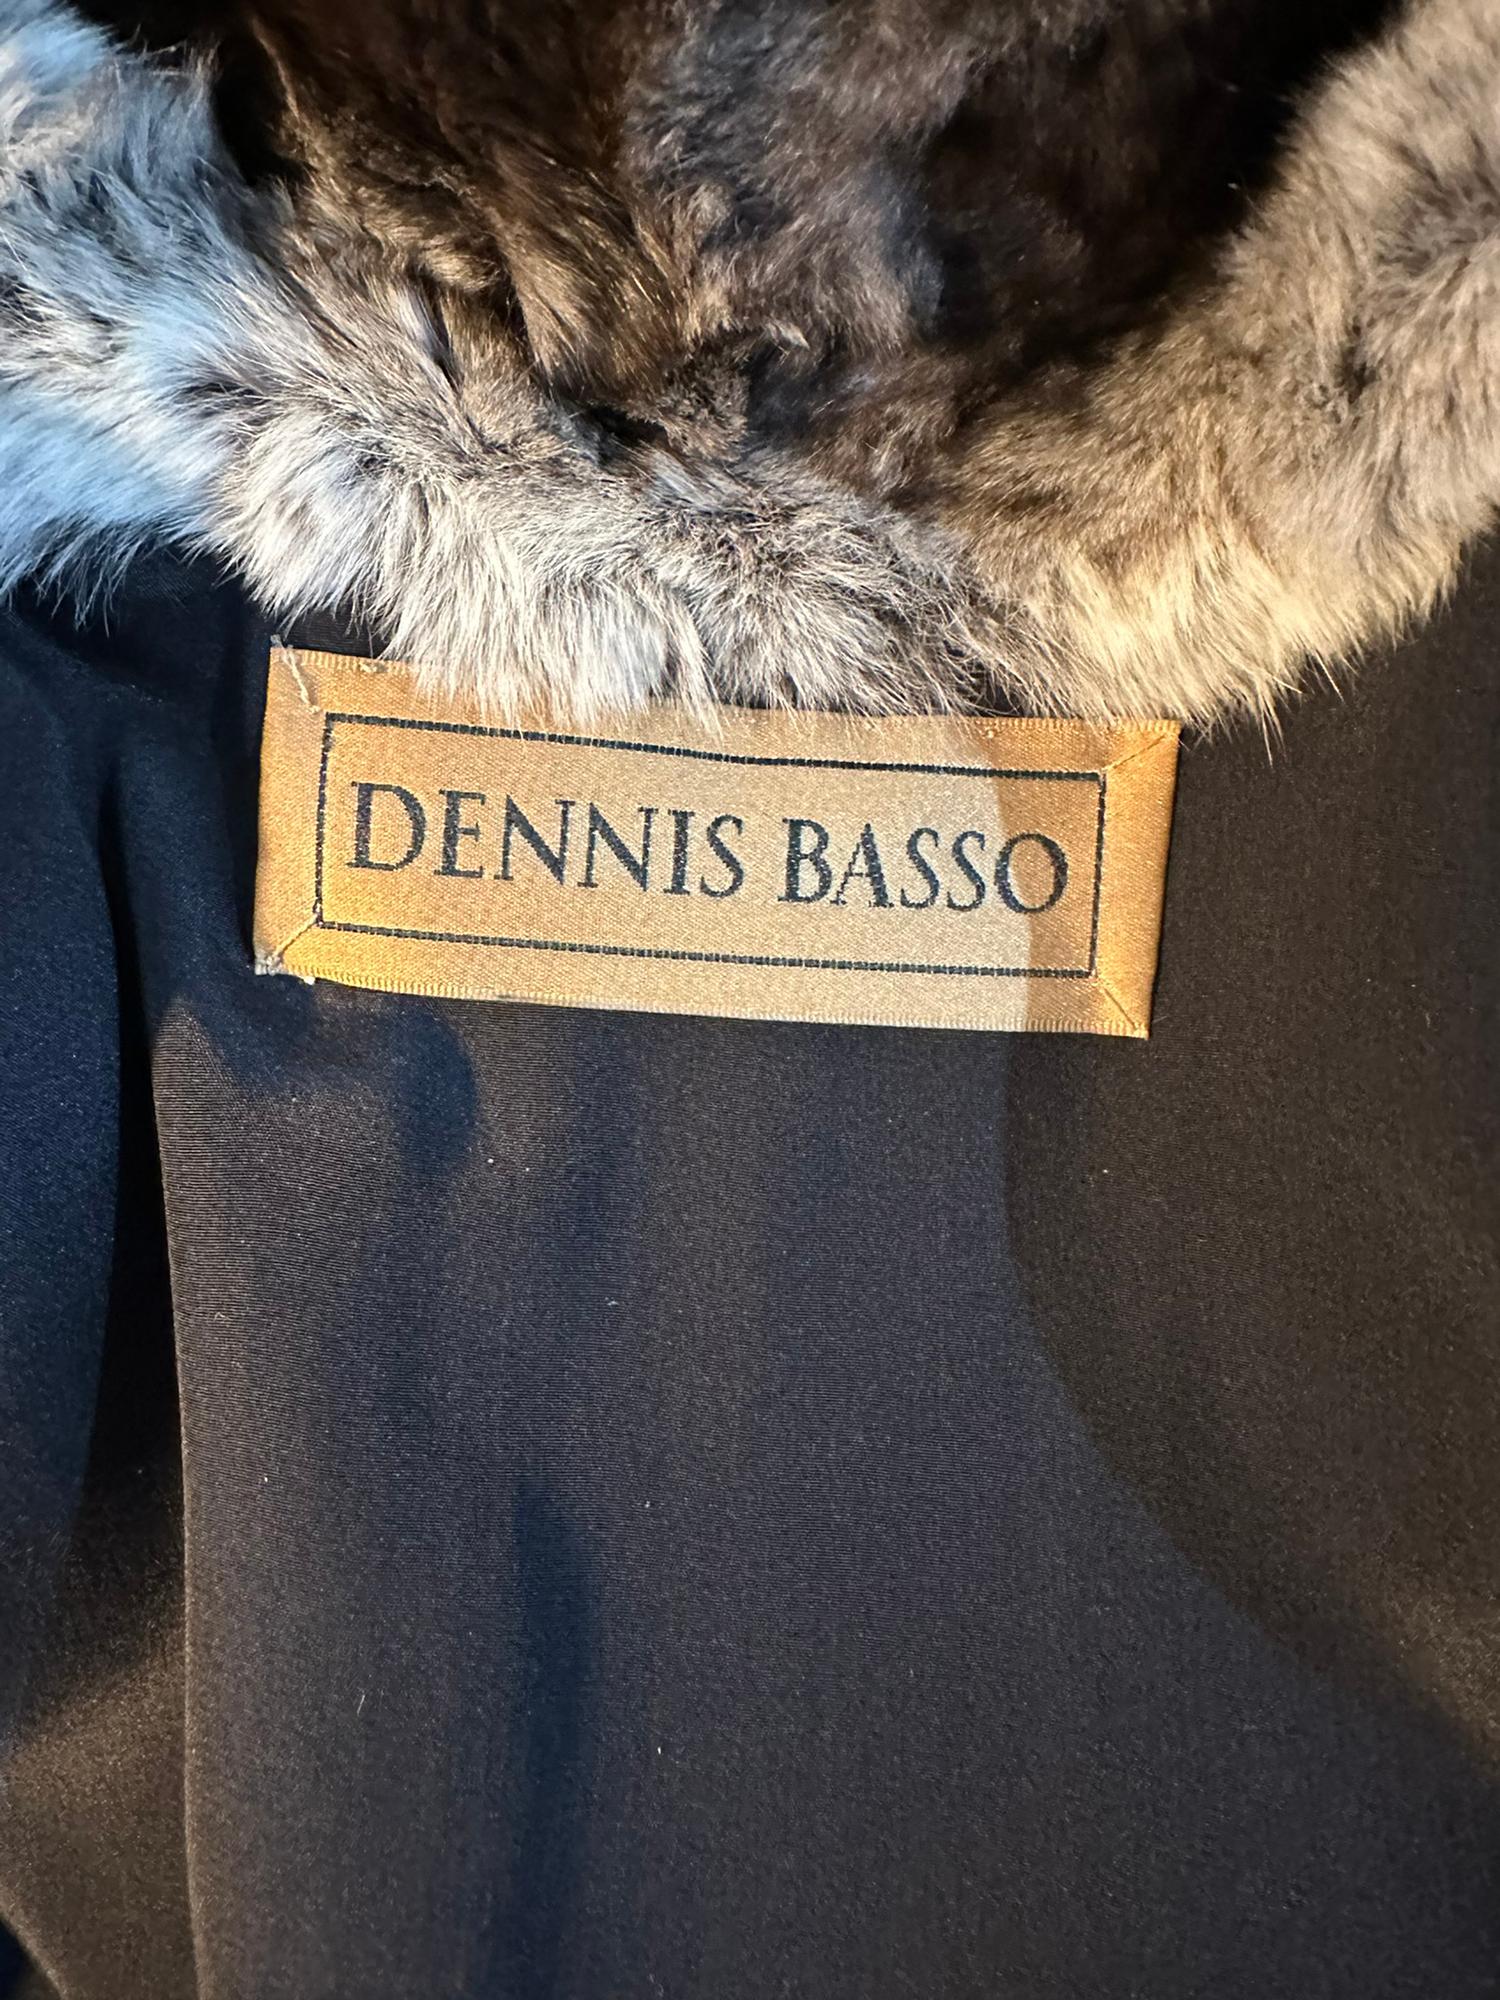 Dennis Basso Chinchilla Fur Jacket in Light & Dark Grey with Cream 2013 S-M 2013 For Sale 10